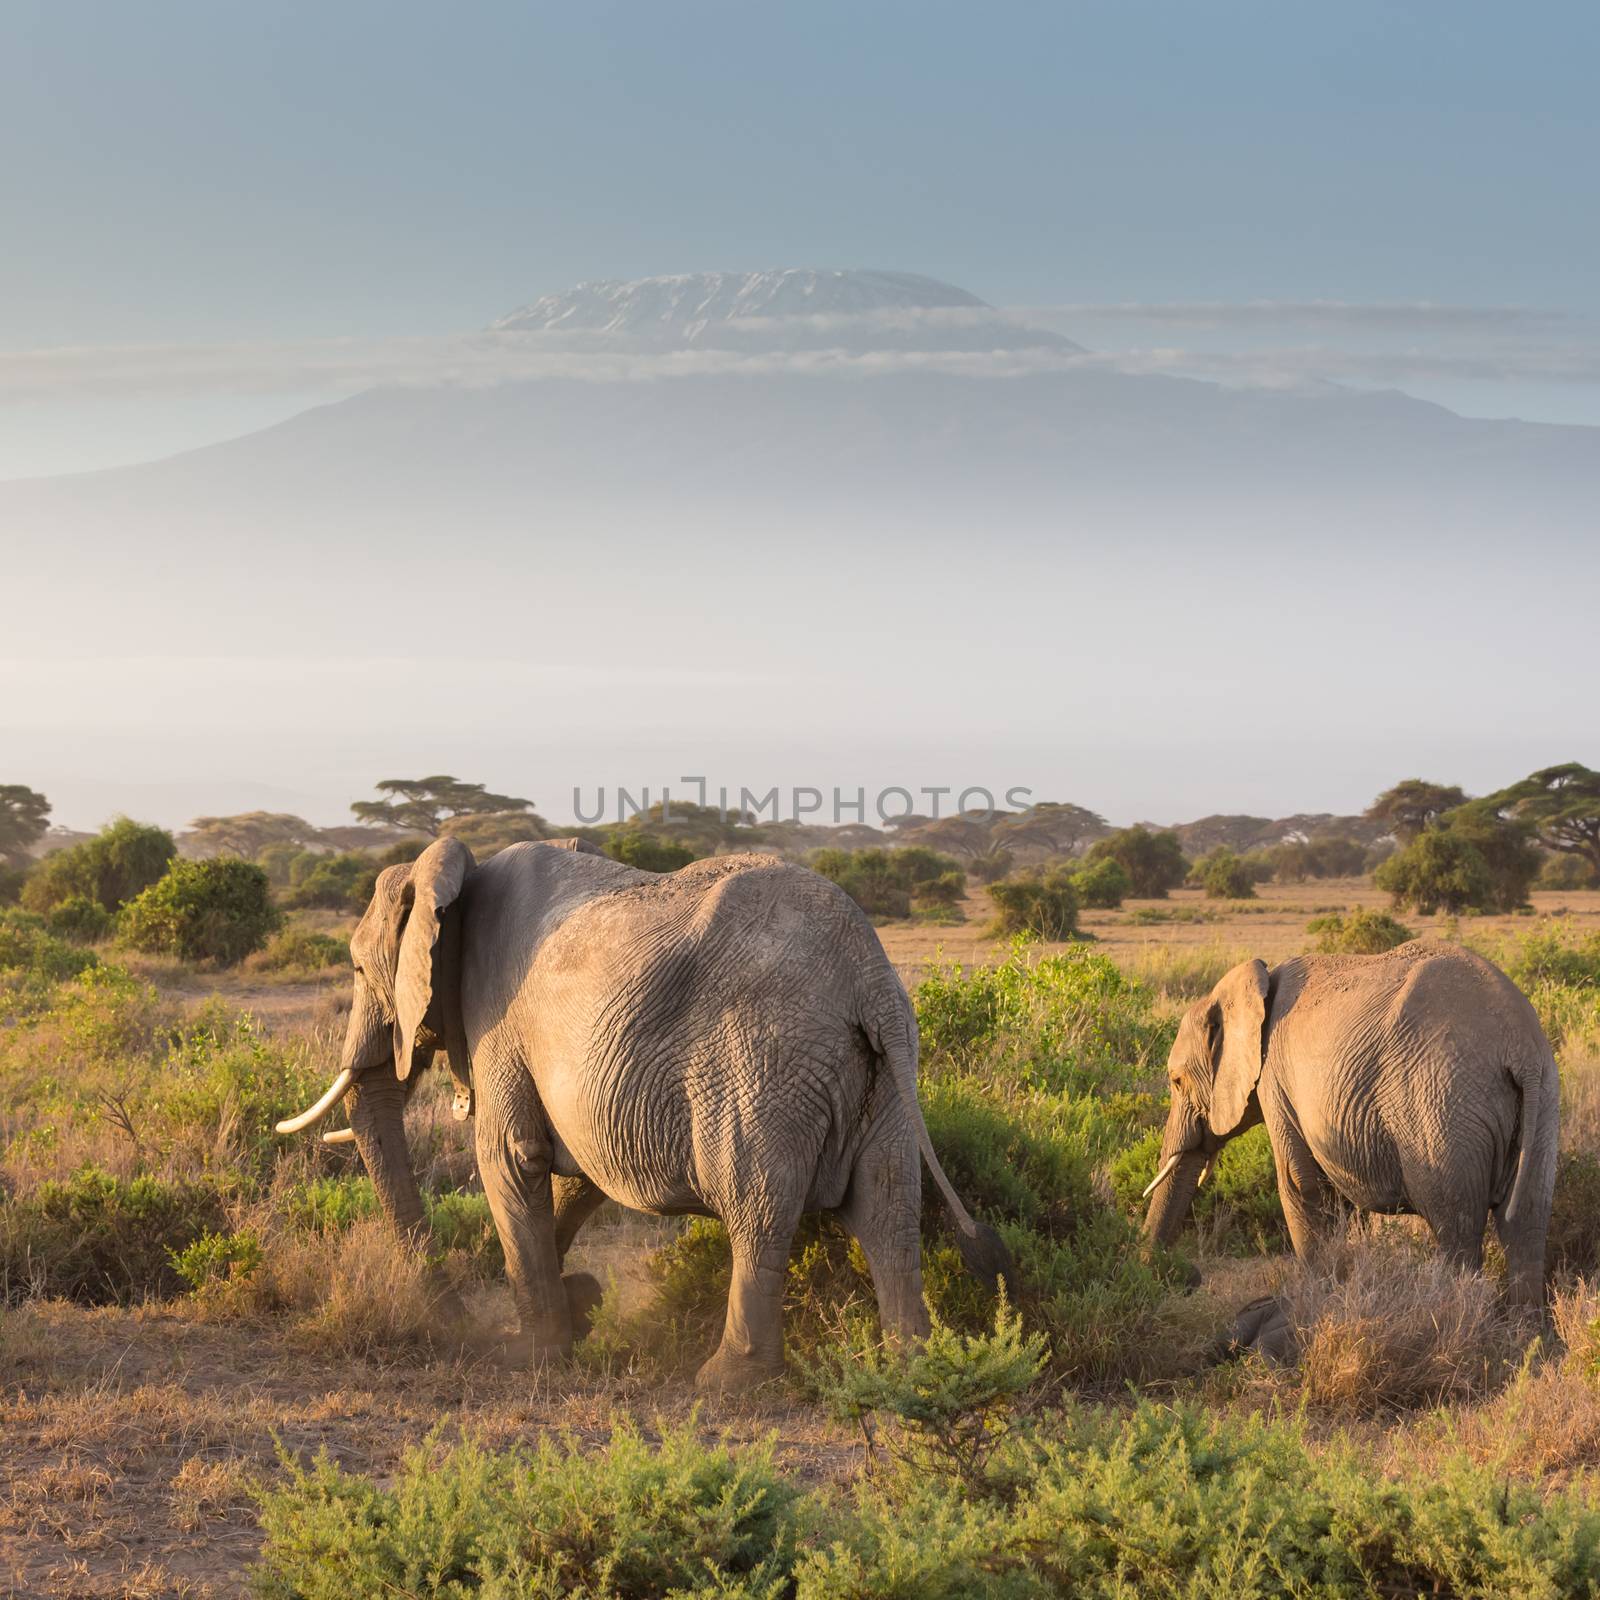 Elephant herd in Amboseli national park in Kenya. Mt. Kilimanjaro in Tanzania can be seen in background. 